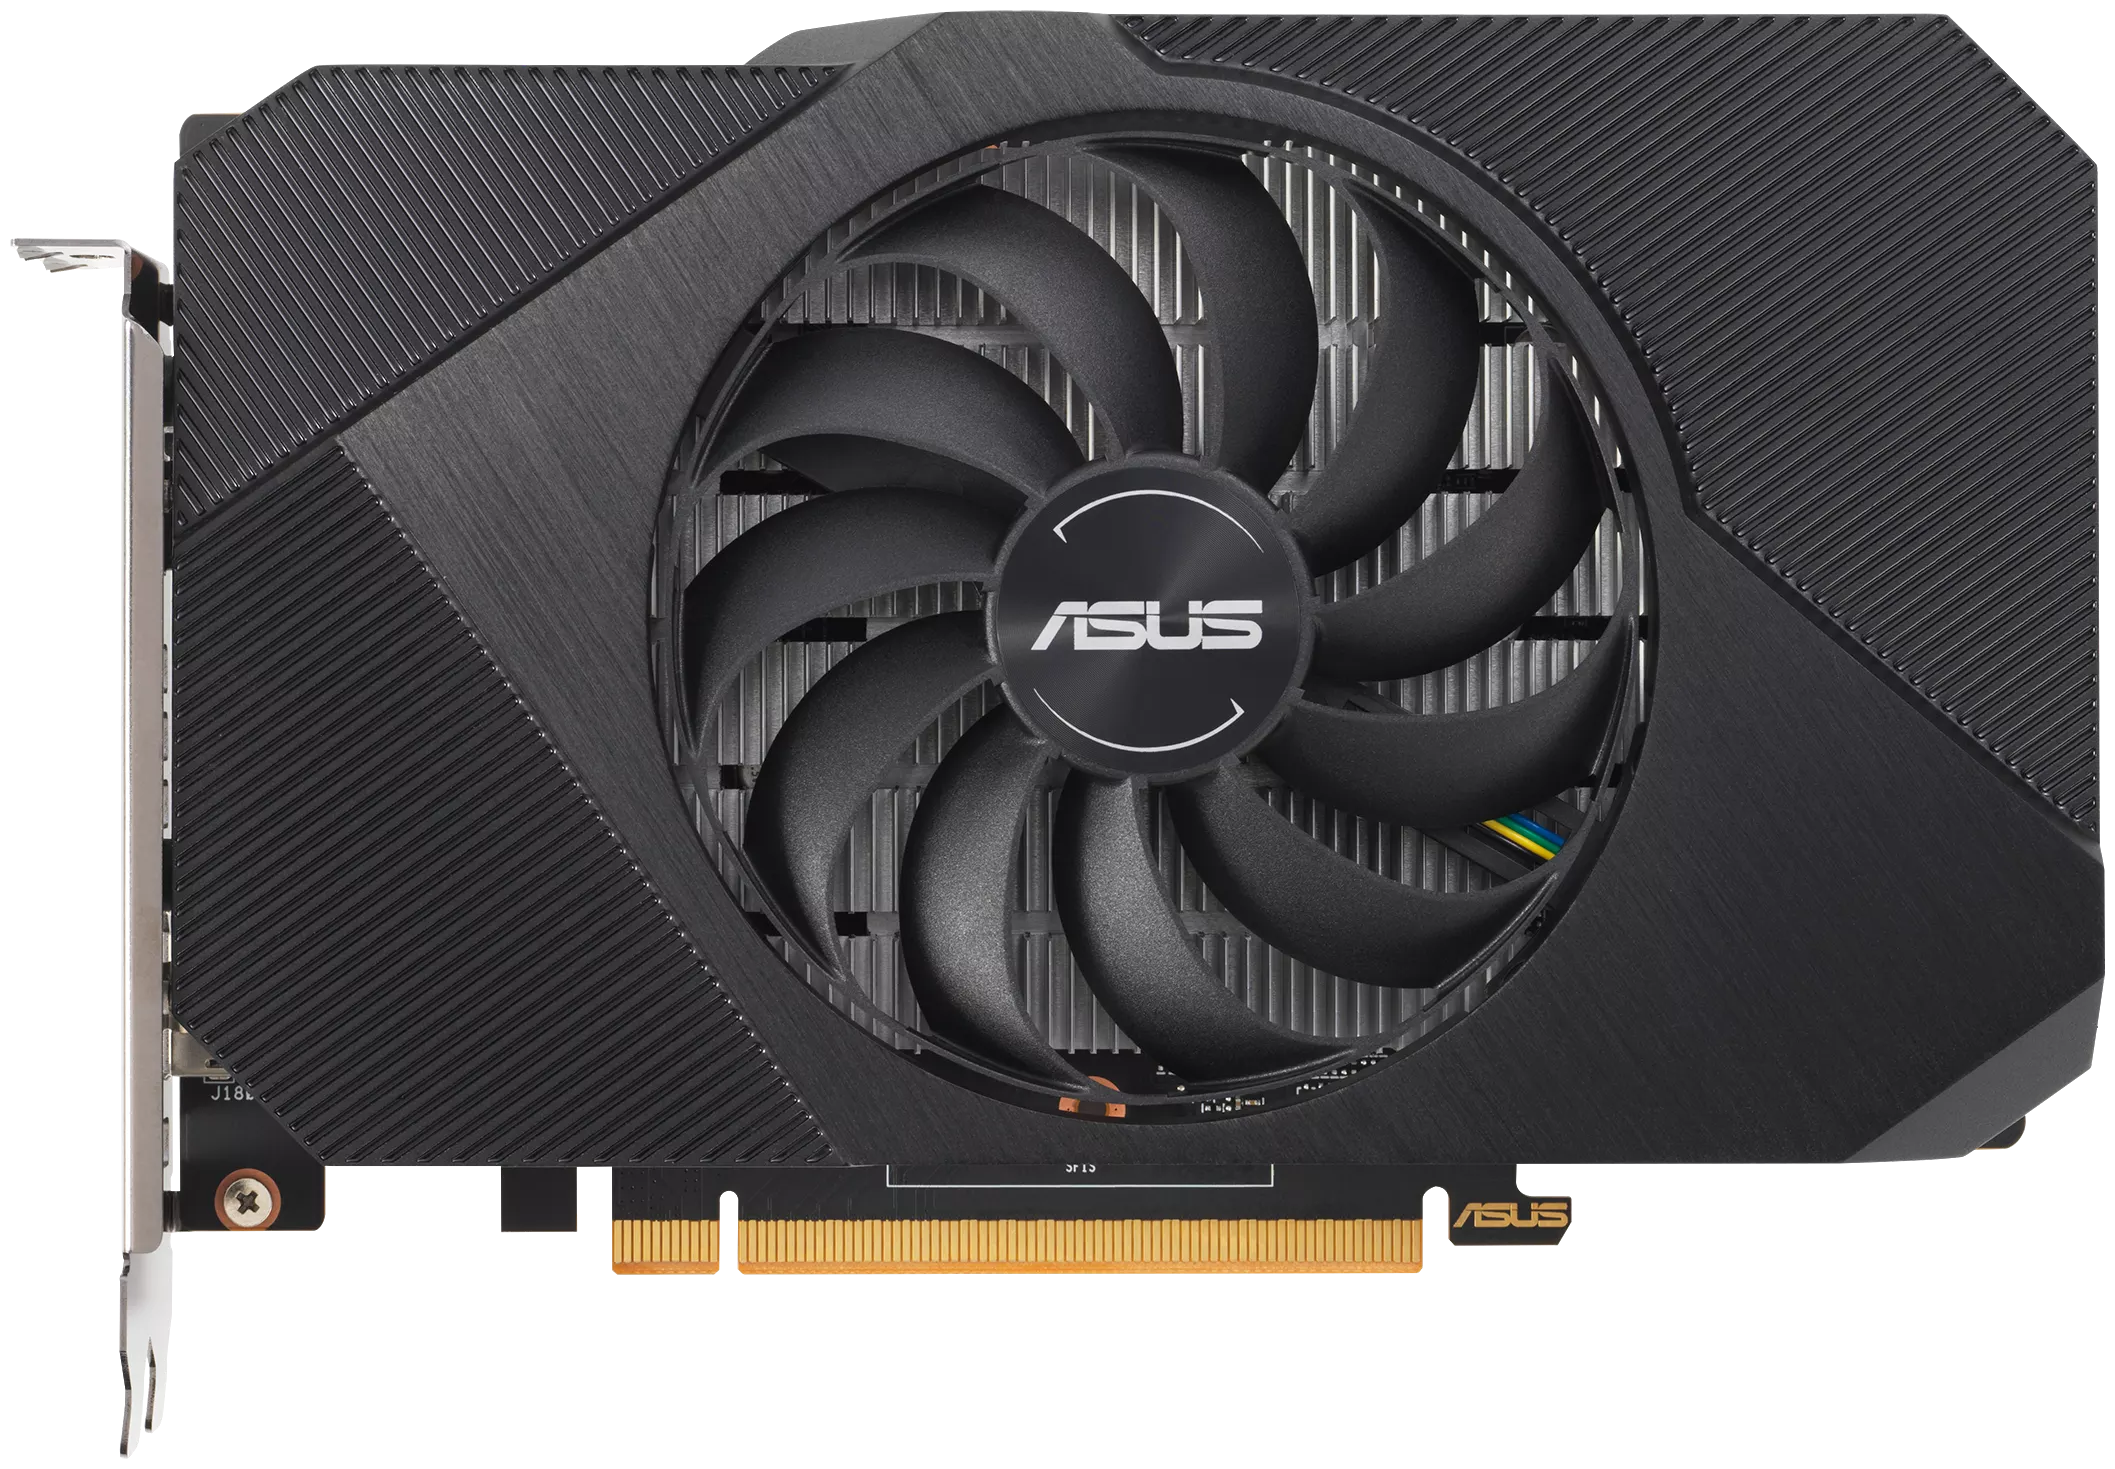 Видеокарта Asus Radeon RX 6400 Phoenix 4G